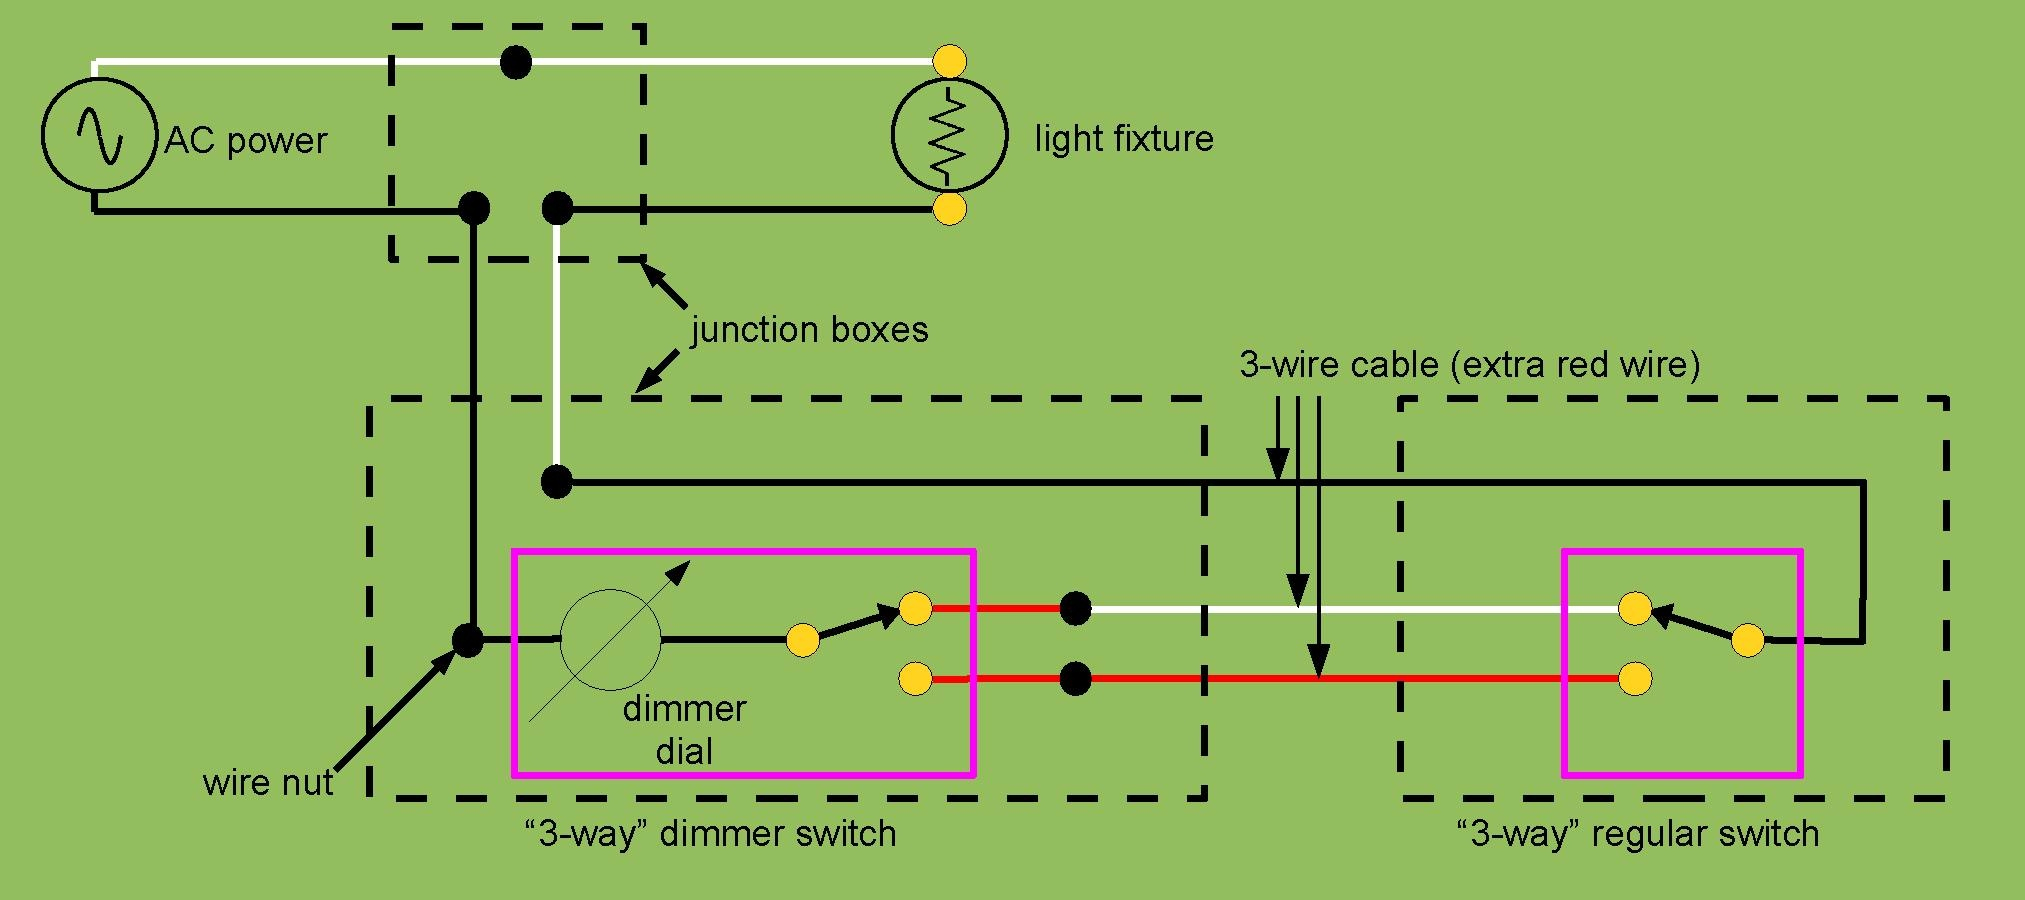 File:3-Way Dimmer Switch Wiring.pdf - Wikimedia Commons - 3 Way Dimmer Switch Wiring Diagram